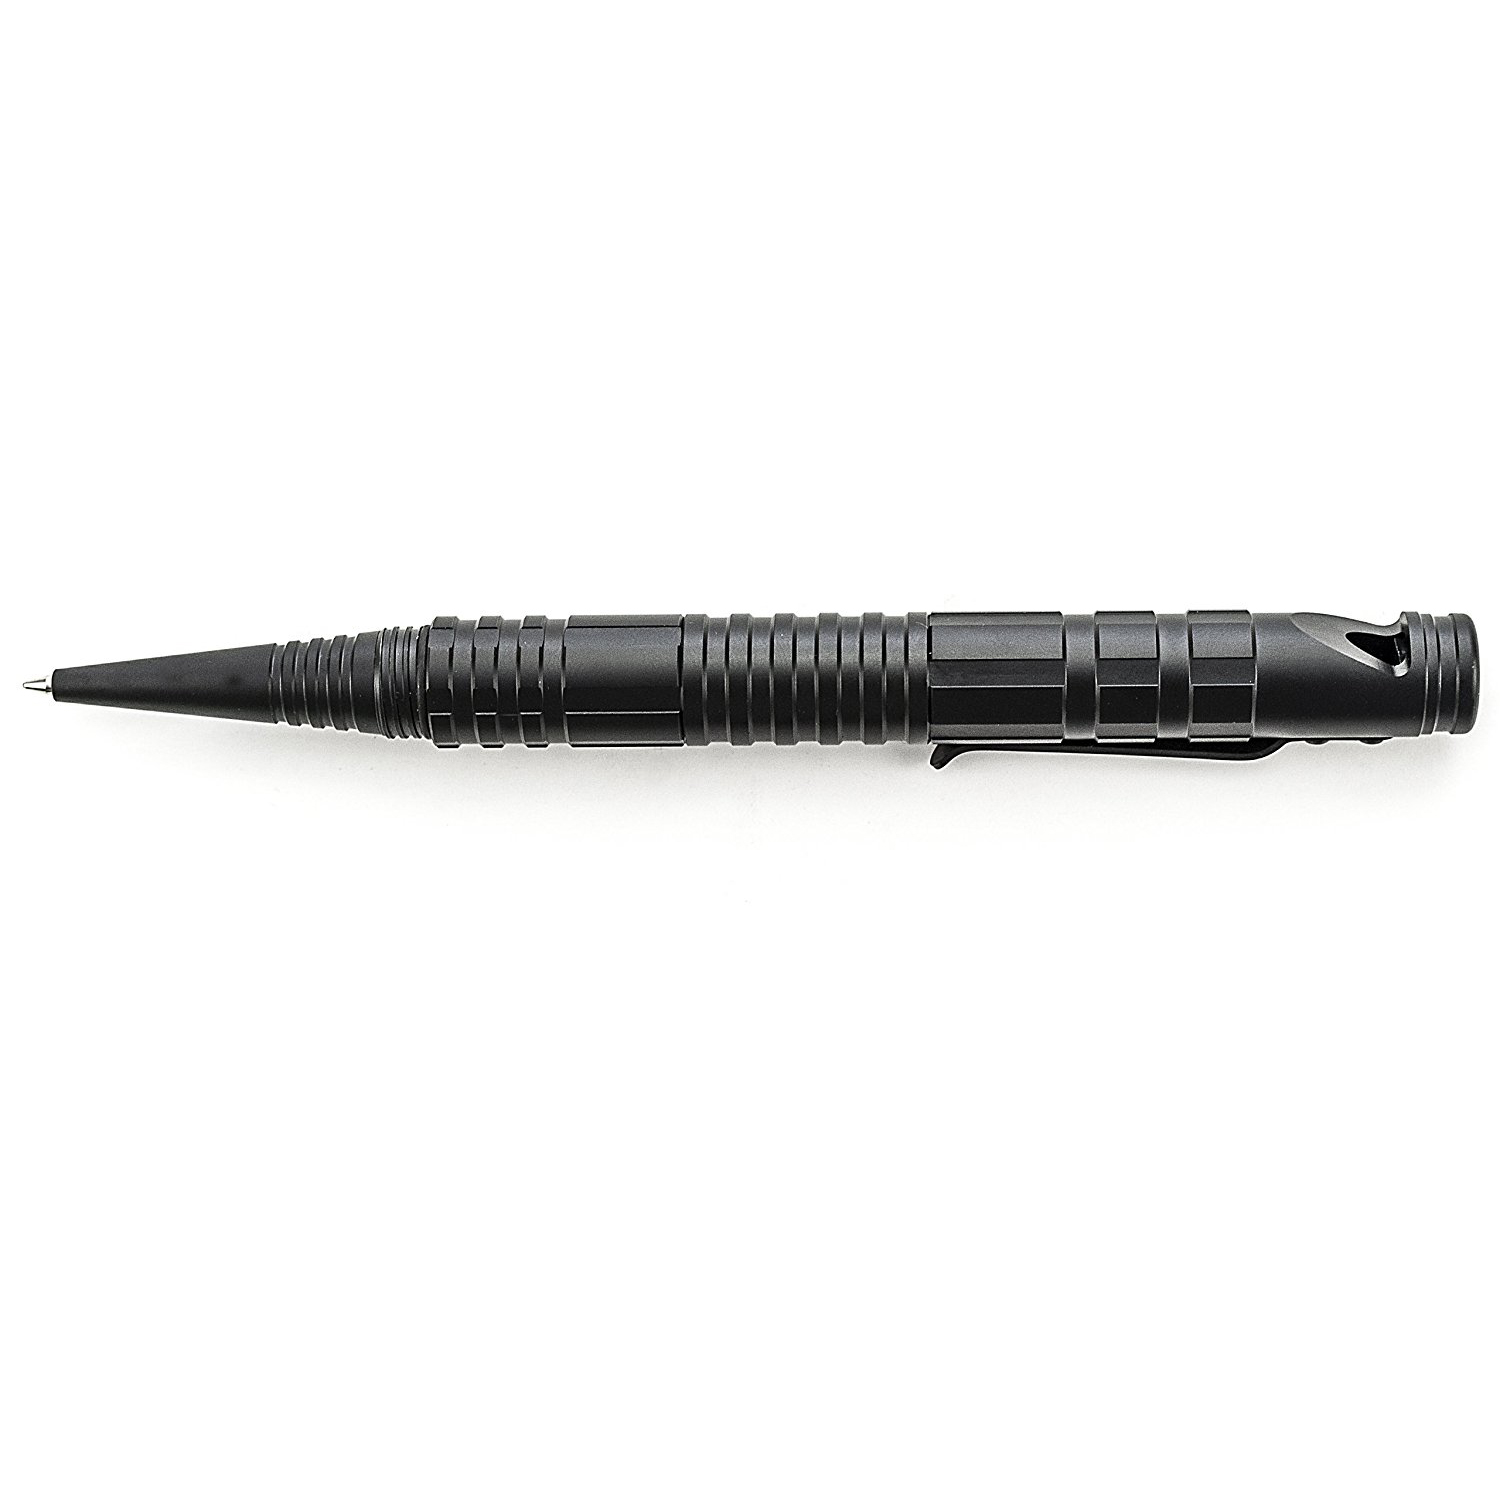 Schrade Tactical Survival Pen Black Ink - Scpen4bk